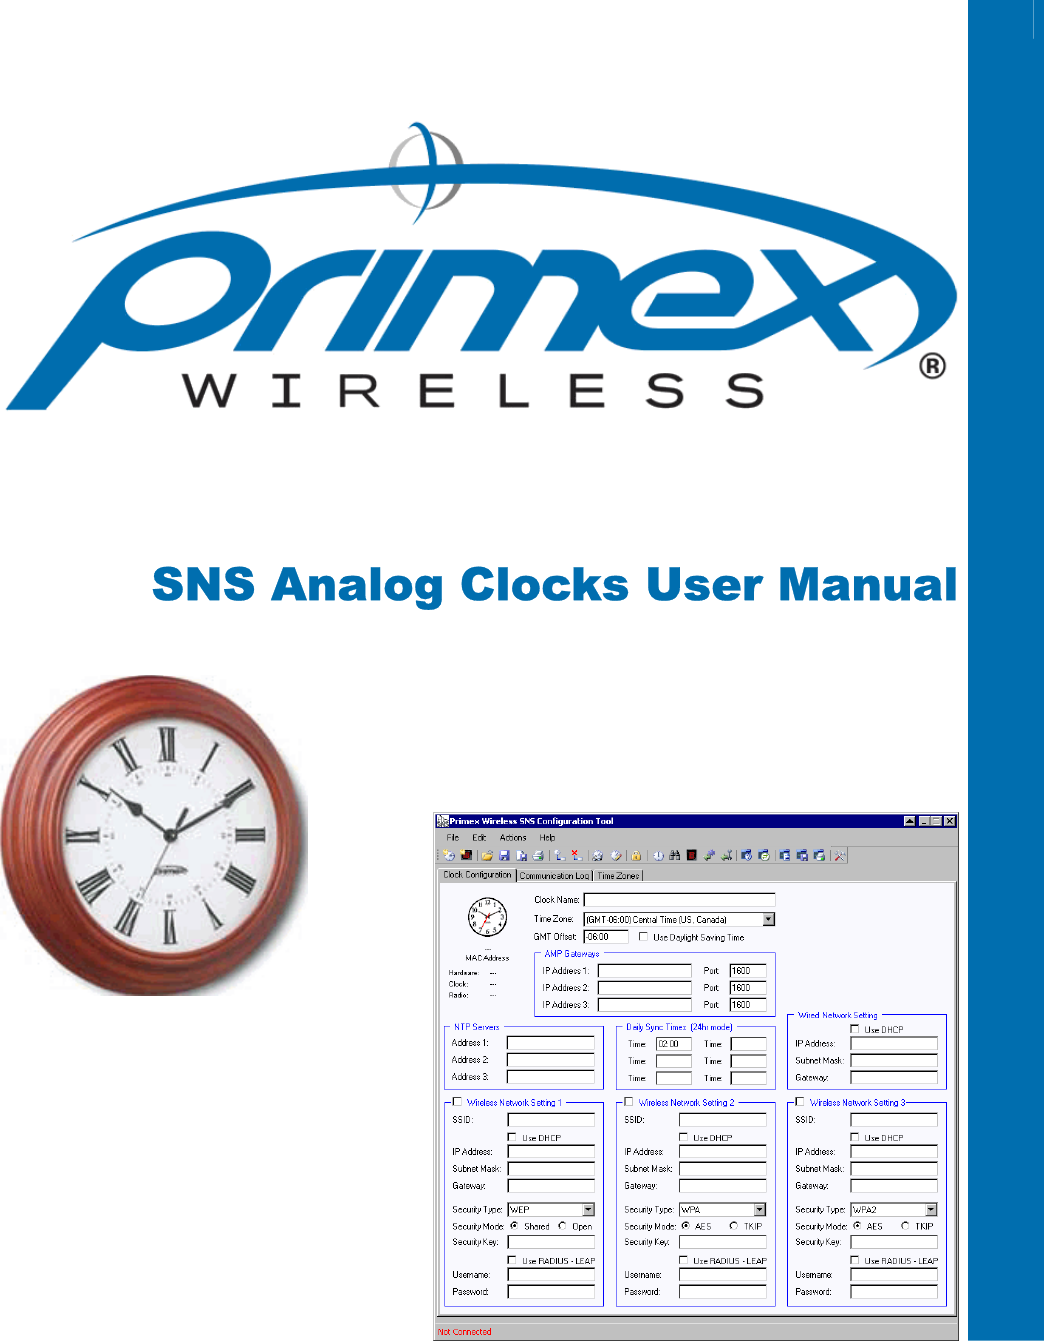   SNS Analog Clocks User Manual   